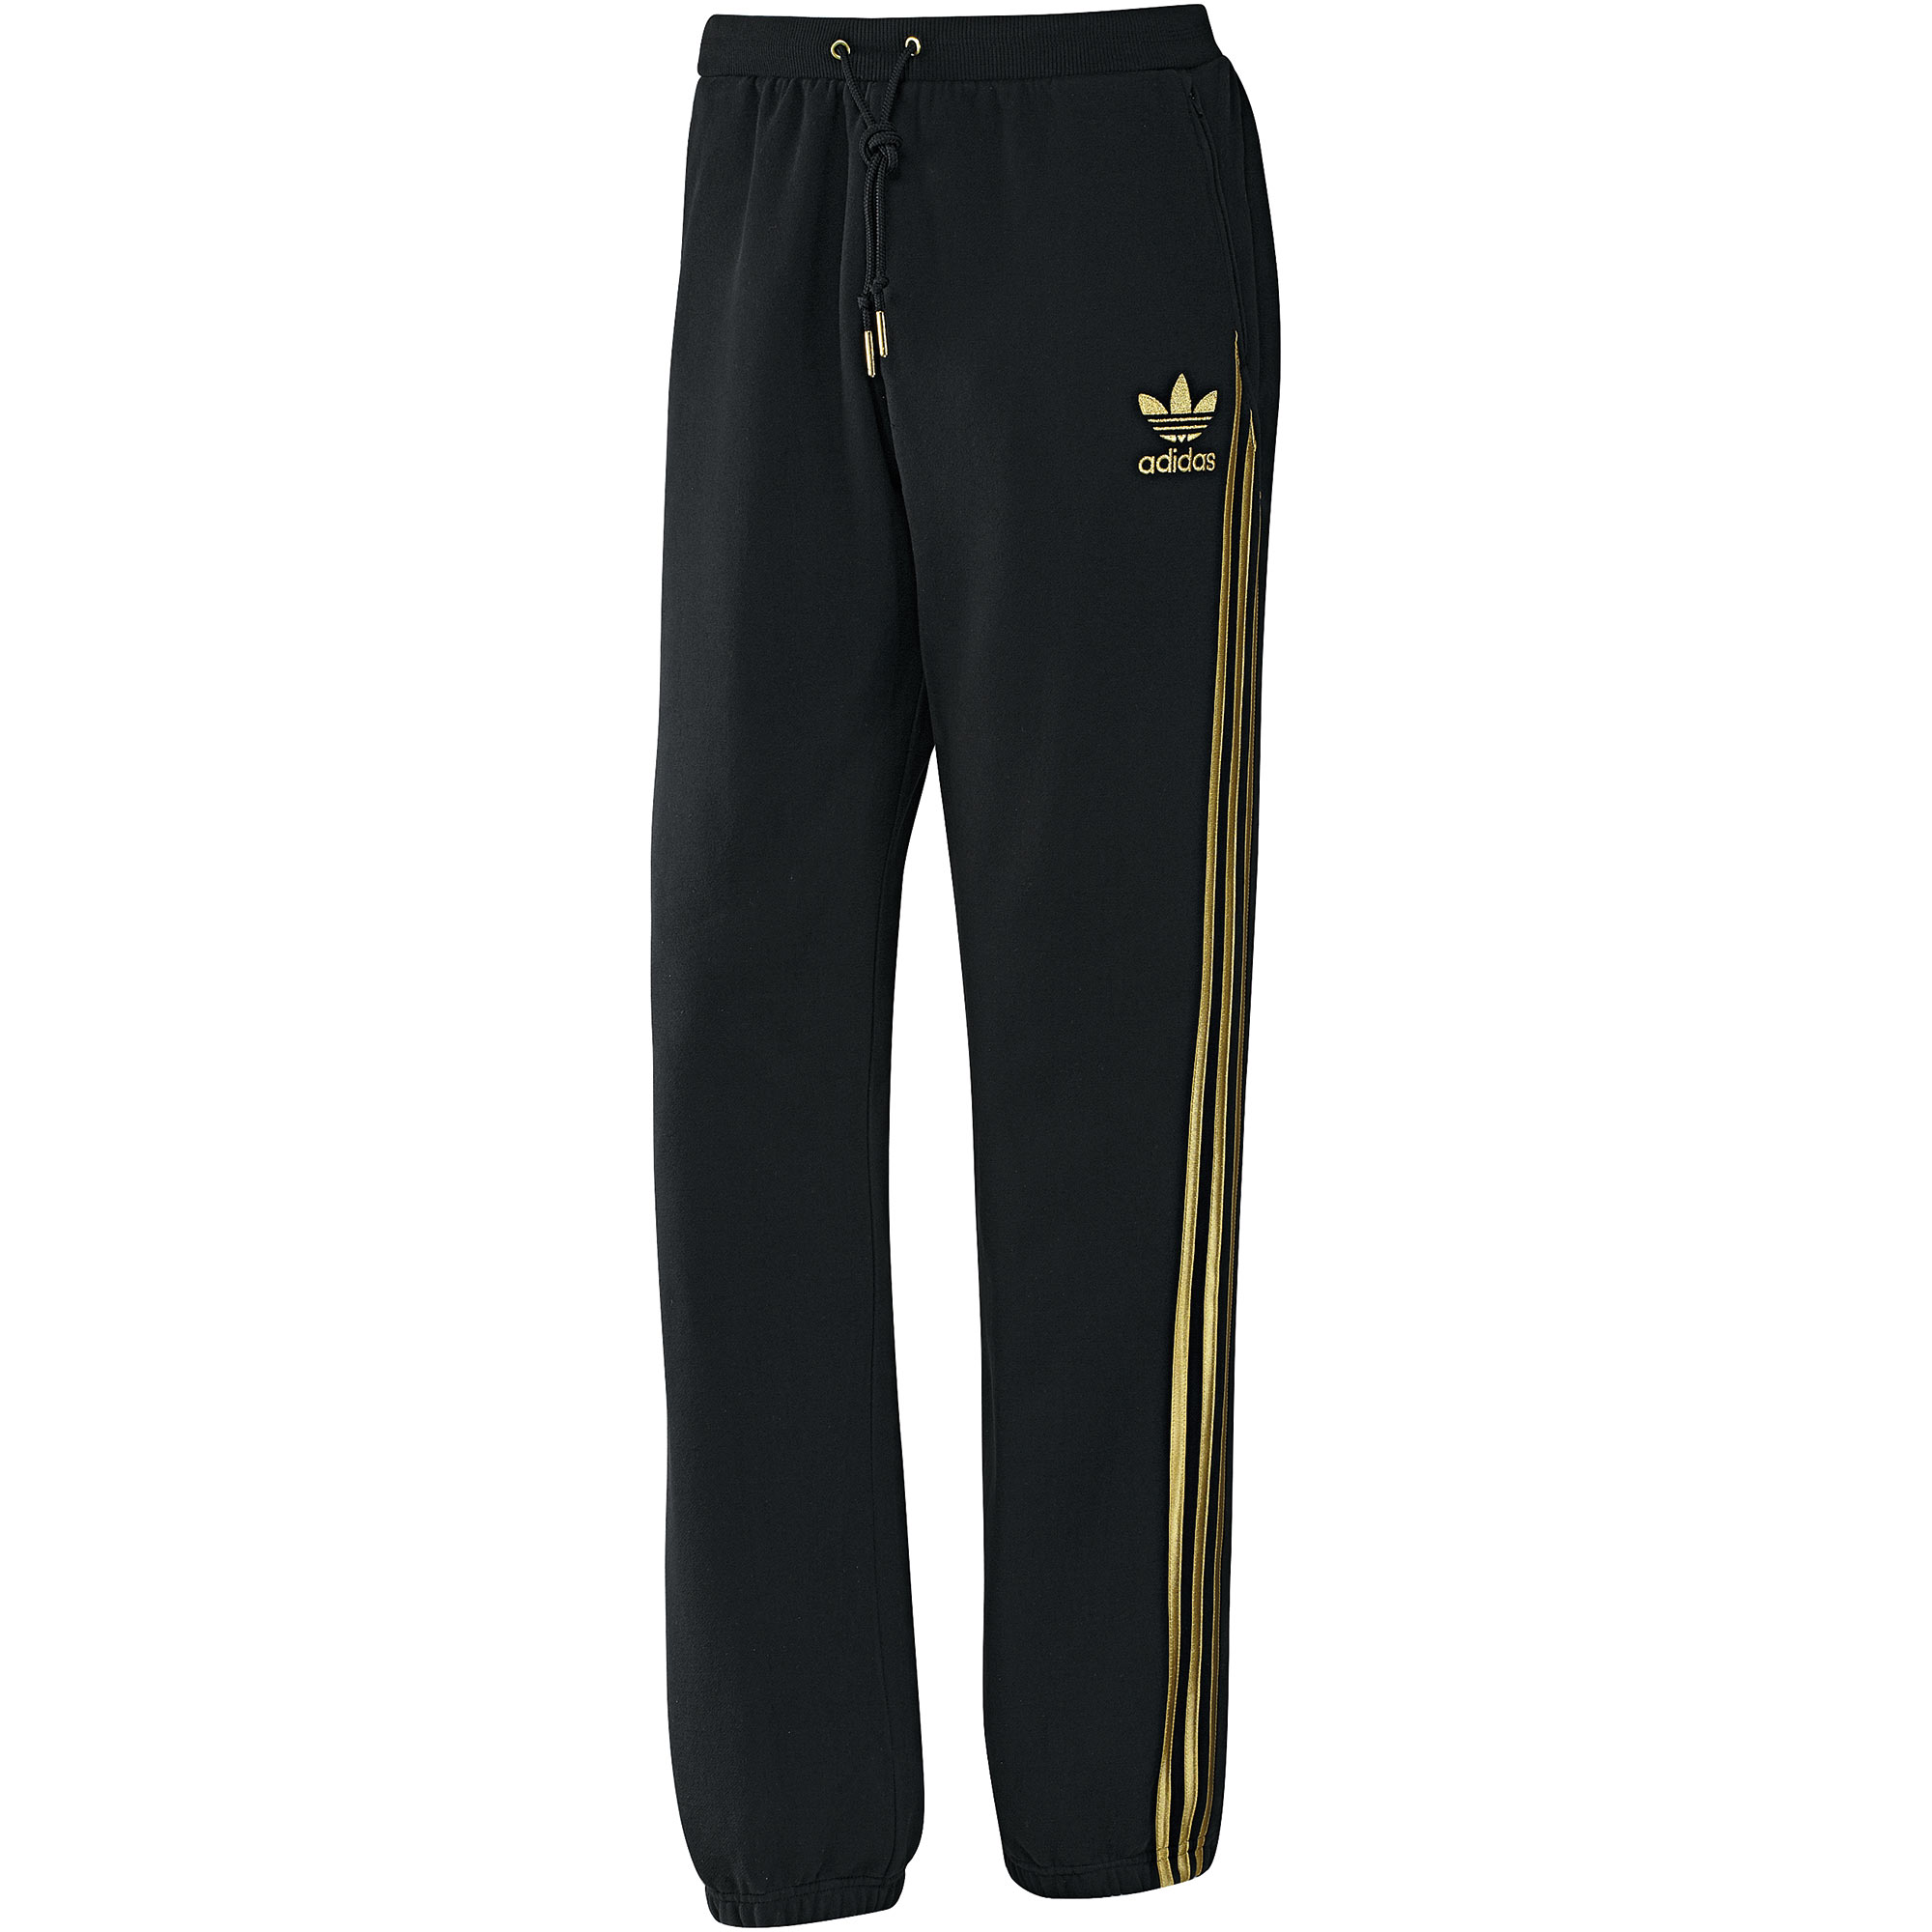 New Men's adidas Originals Fleece Track Pants Black Gold Chile 62 S M L ...